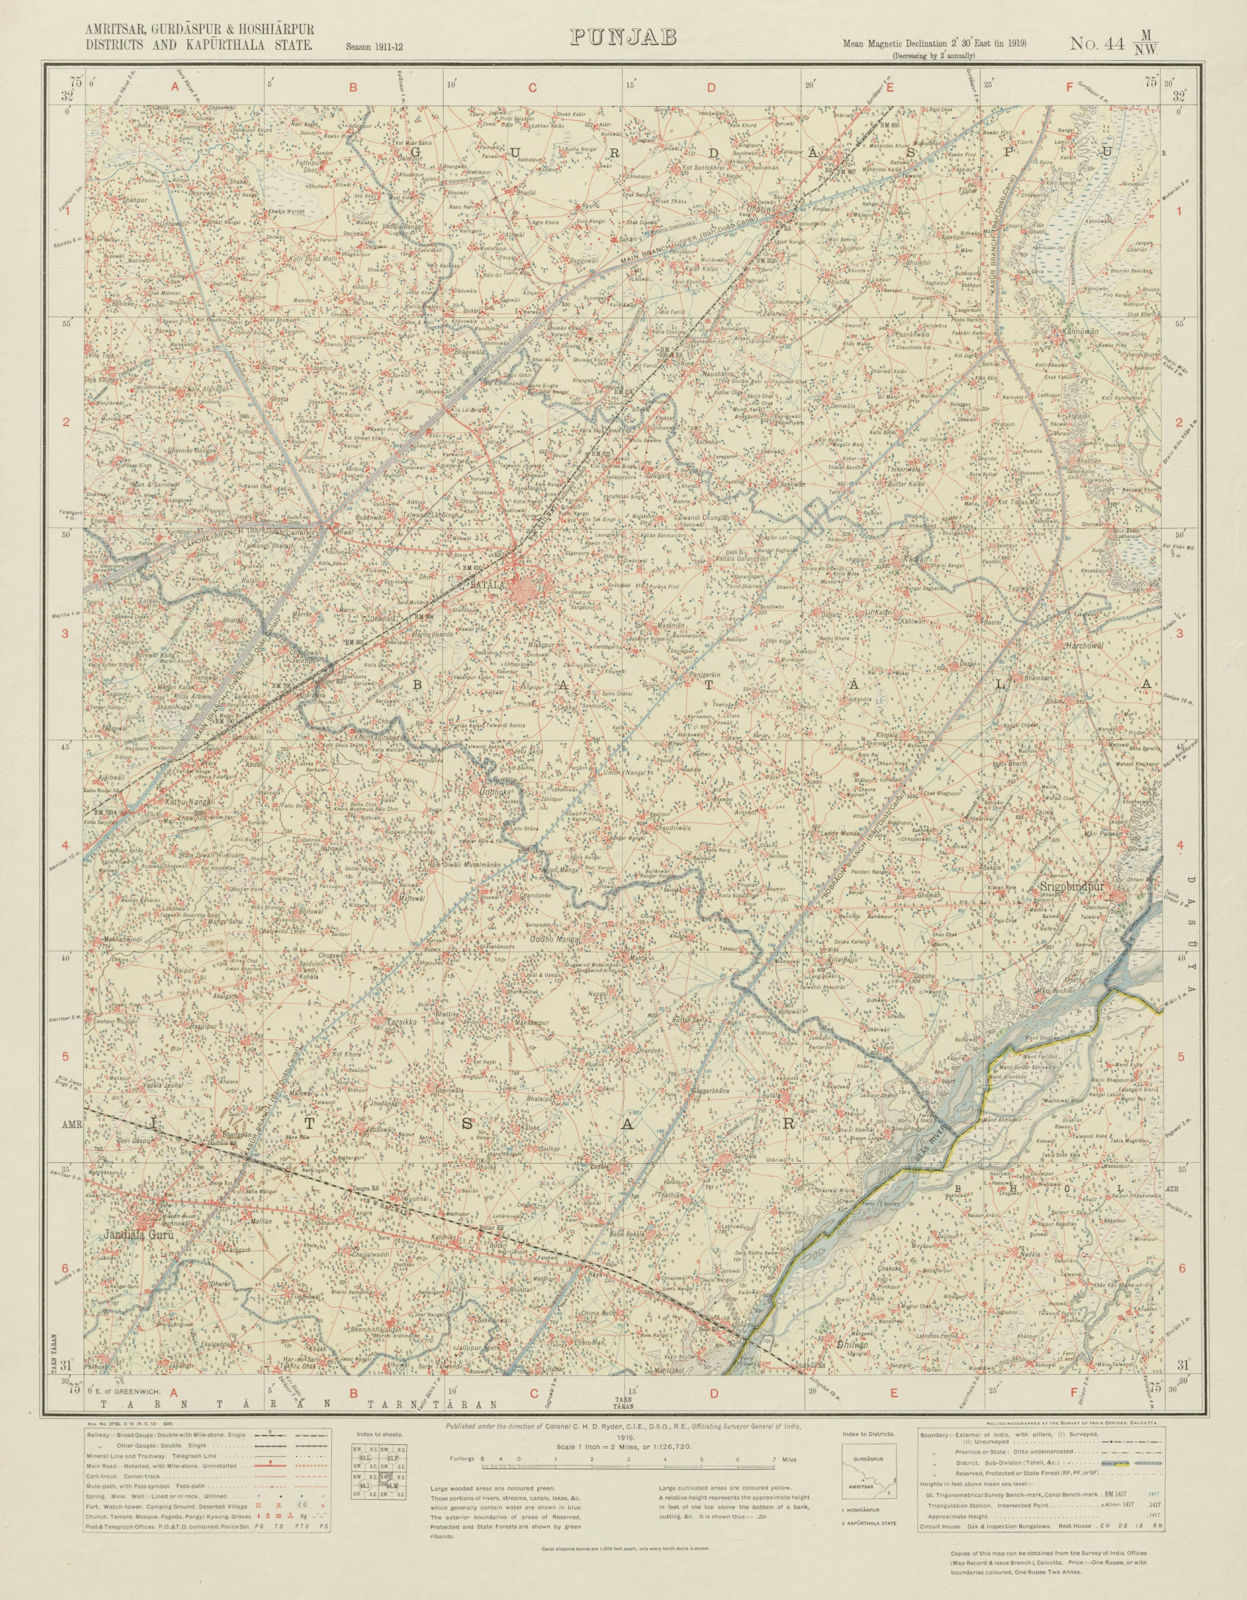 SURVEY OF INDIA 44 M/NW Pakistan Punjab Batala Jandiala Hargobindpur  1919 map